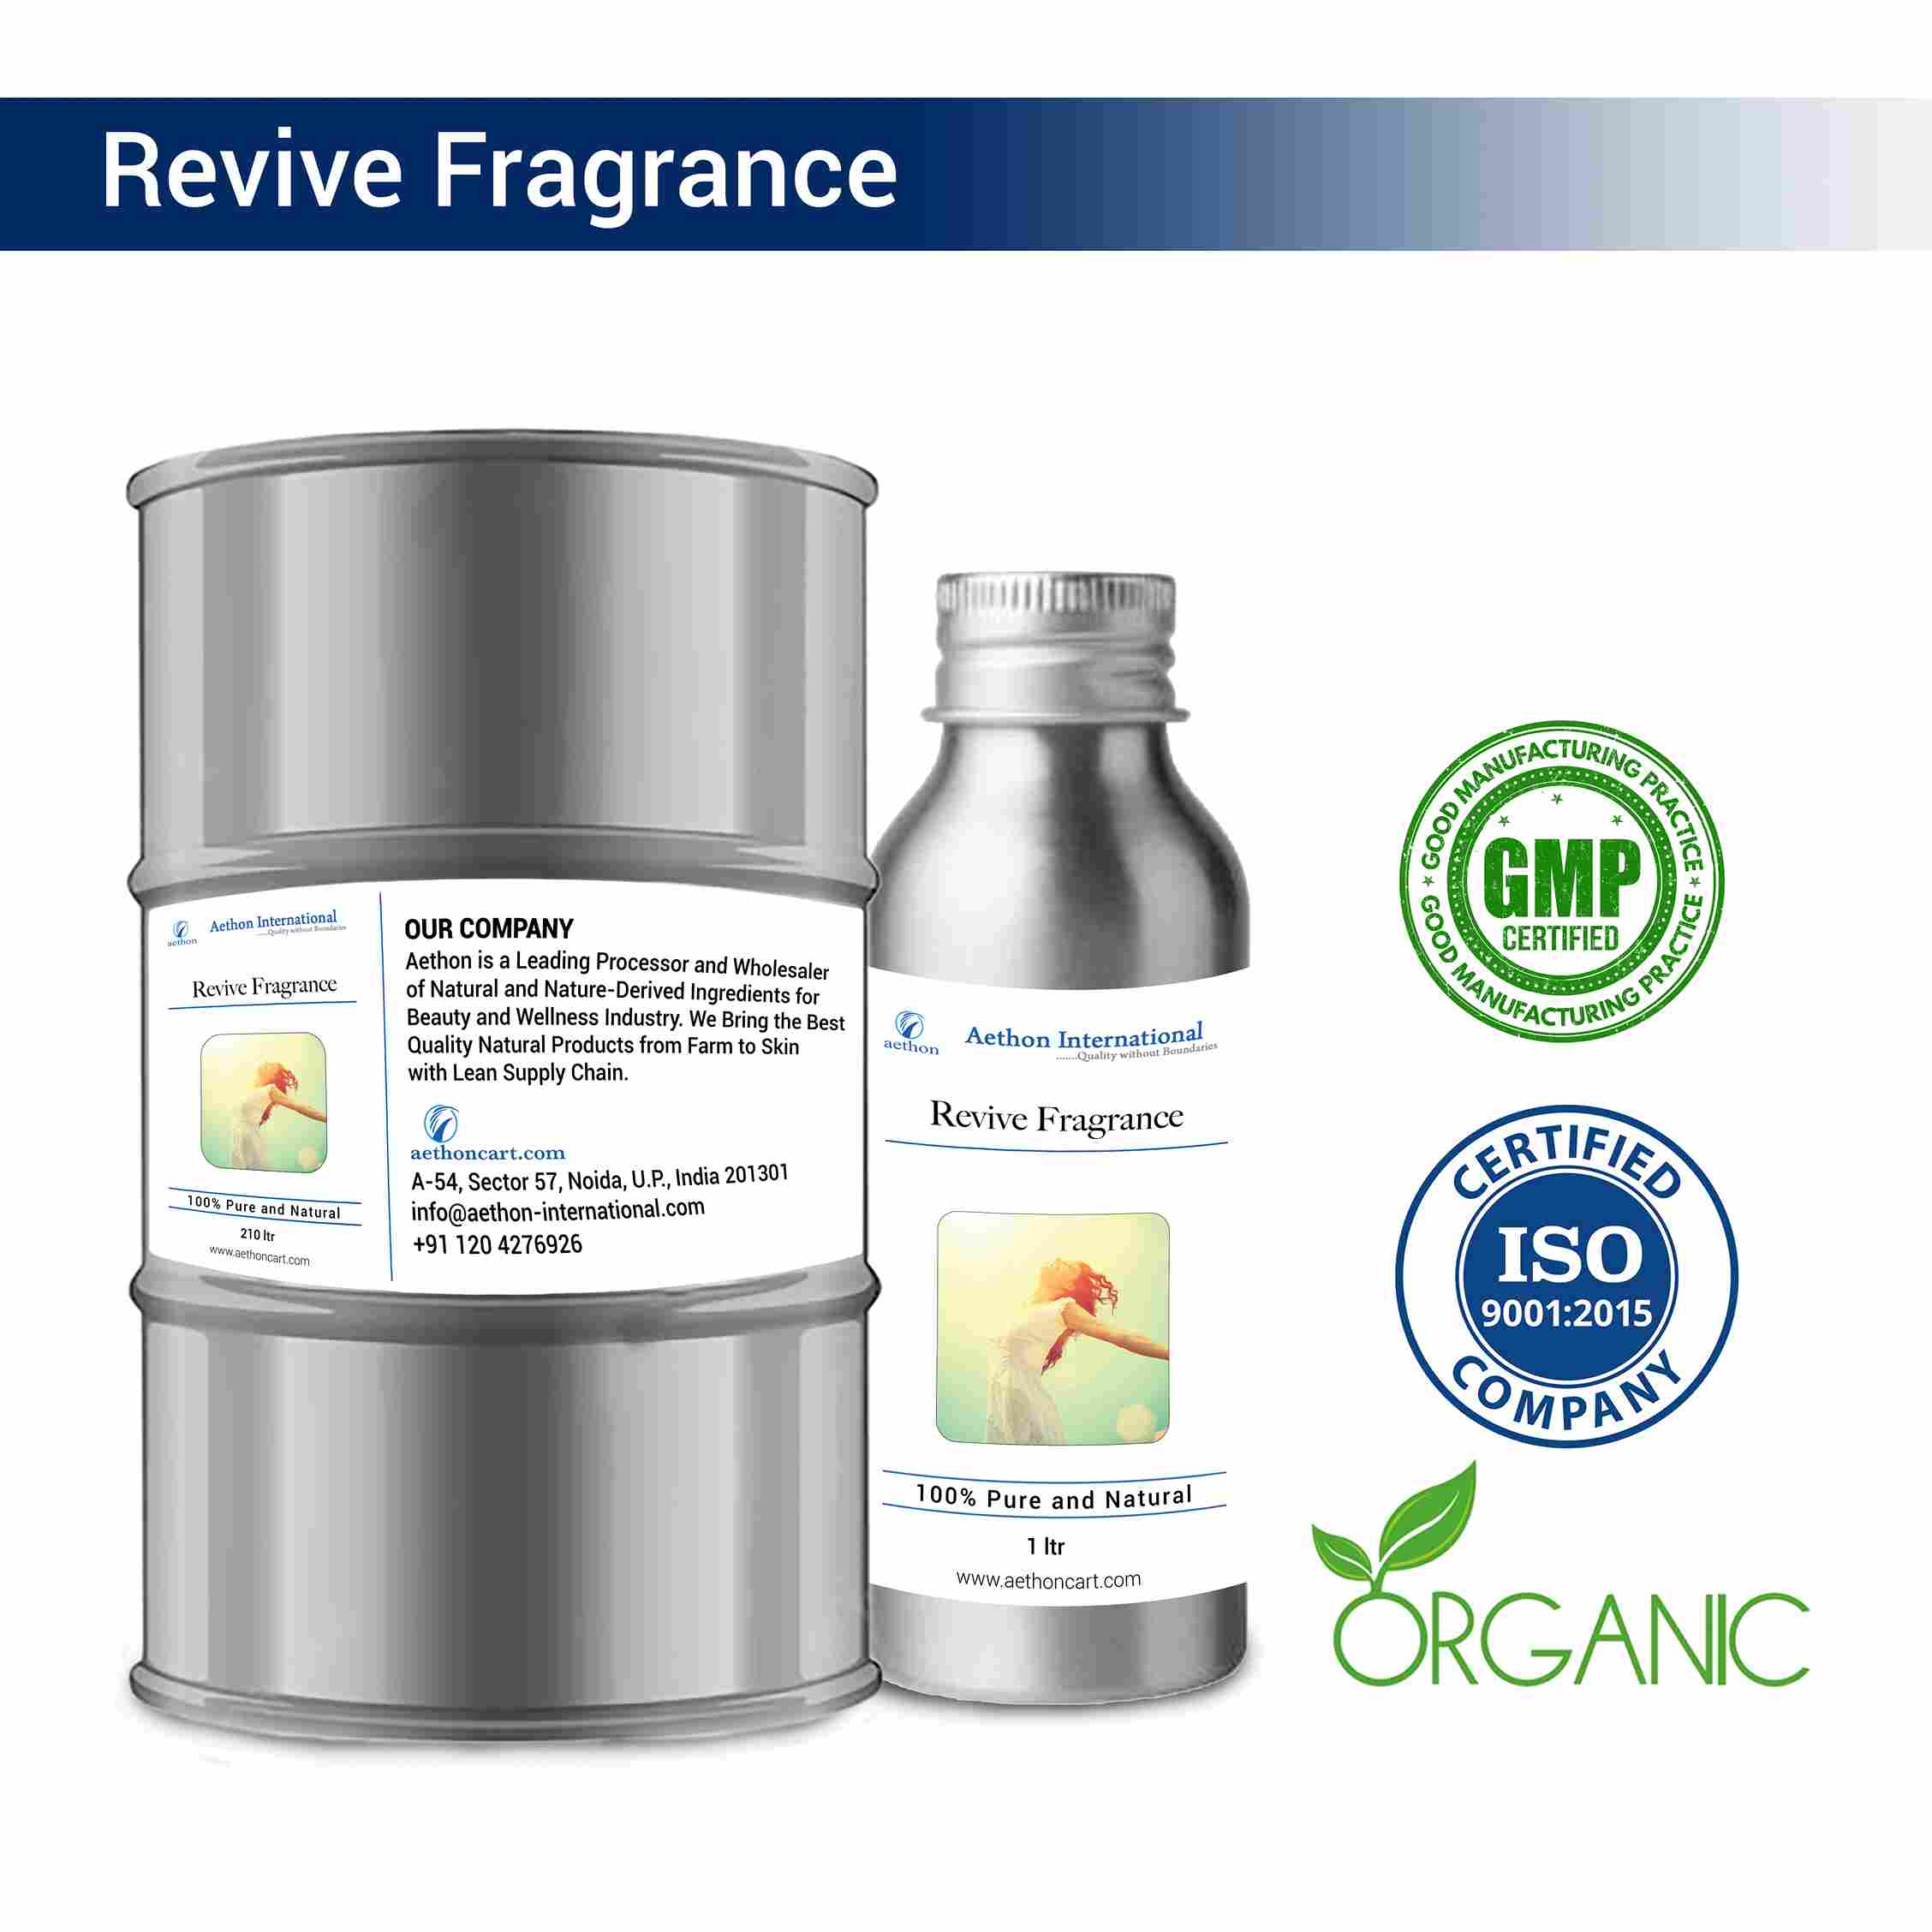 Revive Fragrance